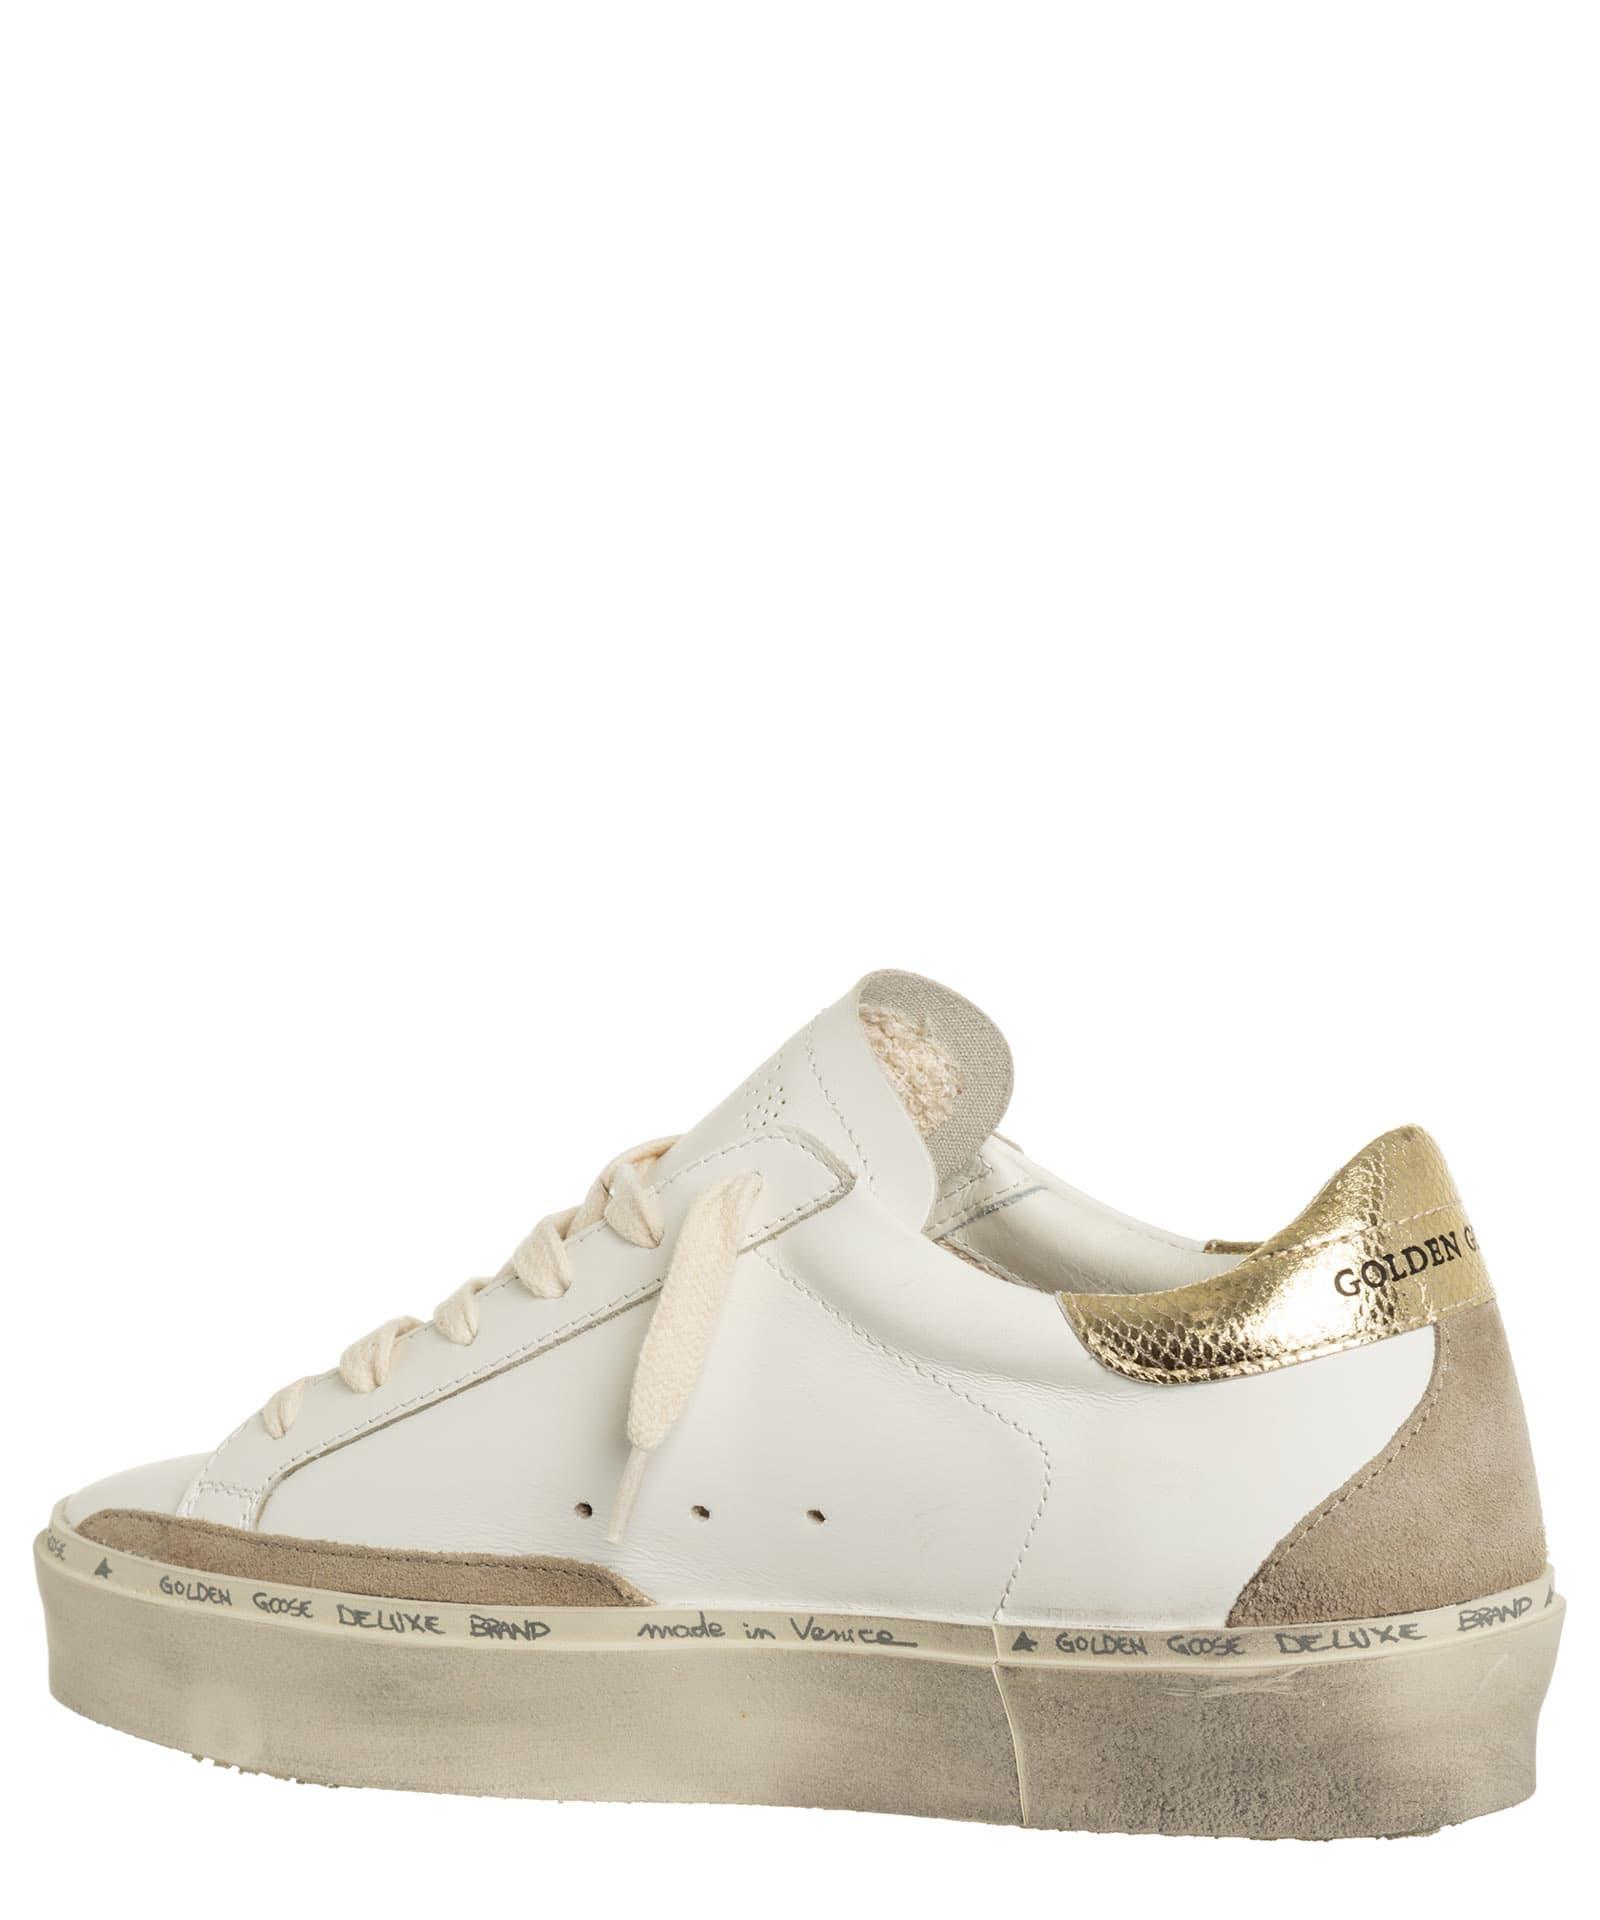 Golden Goose Hi Star Sneakers in White | Lyst